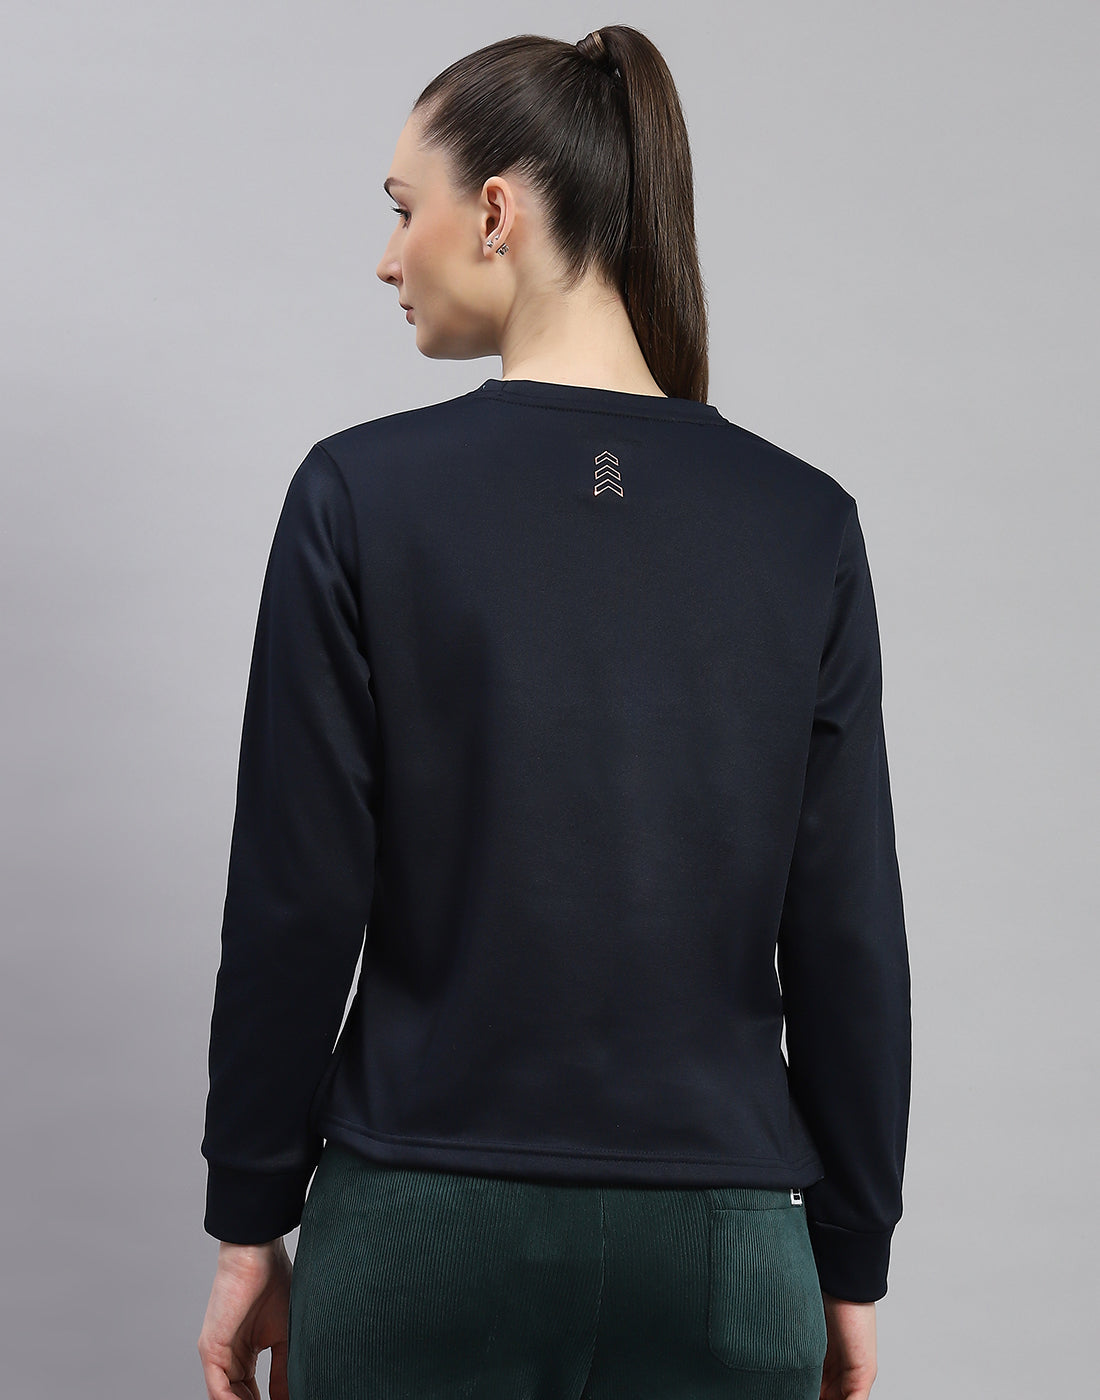 Women Navy Blue Printed Round Neck Full Sleeve Sweatshirt